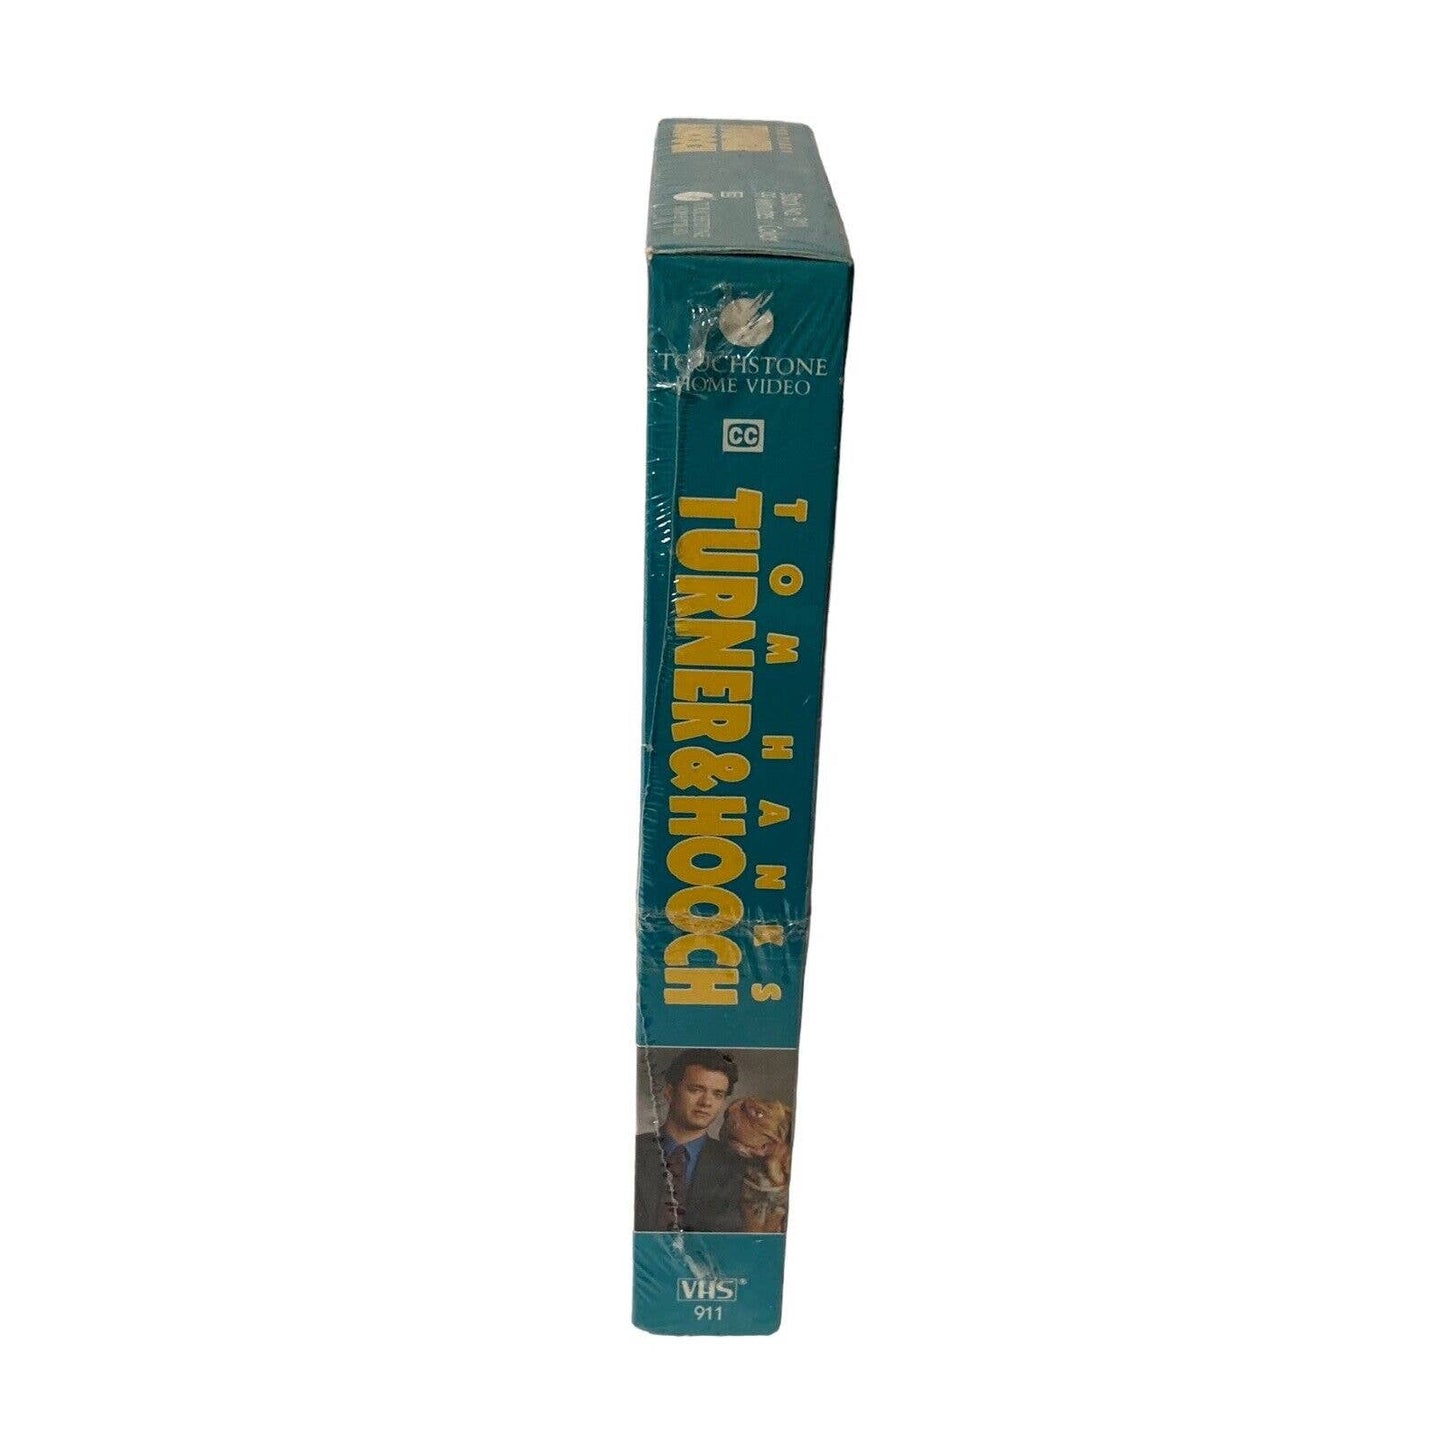 Turner & Hooch (VHS, 1996) Tom Hanks Vintage Touchstone Home Video